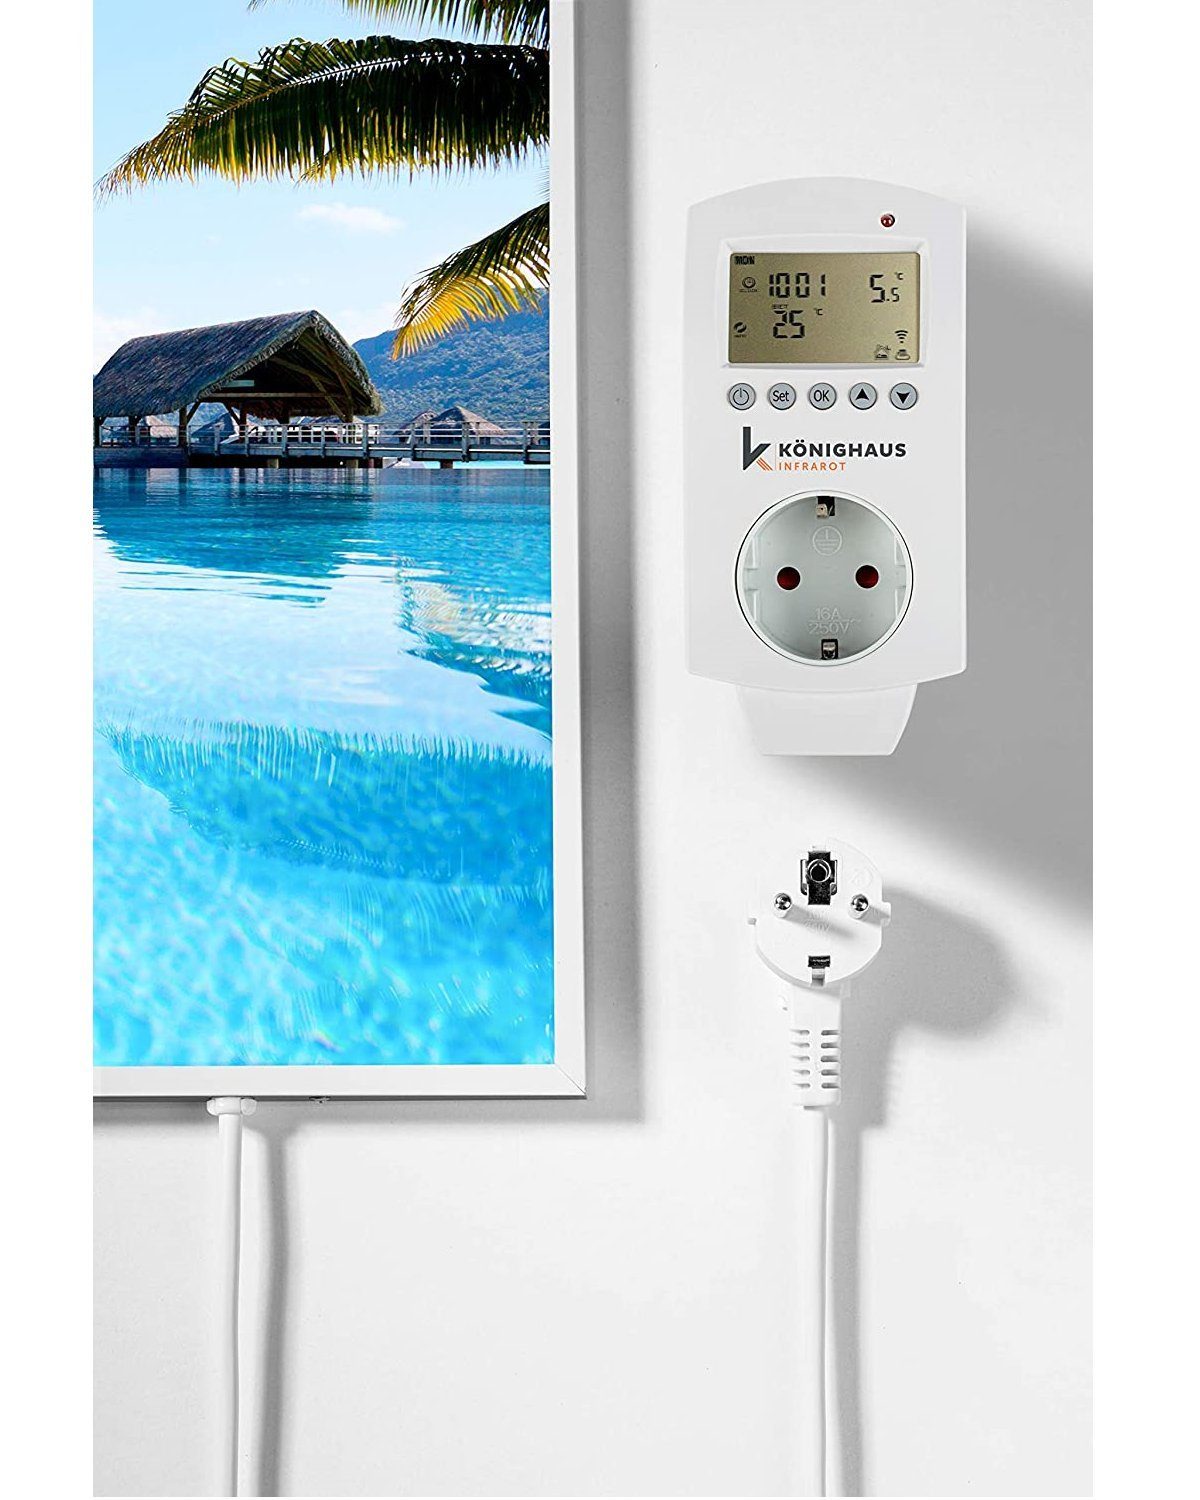 Bora Insel Bora Smart Smart, Bild-Serie Home Strahlungswärme, 1000W Germany, Infrarotheizung Könighaus in angenehme Made